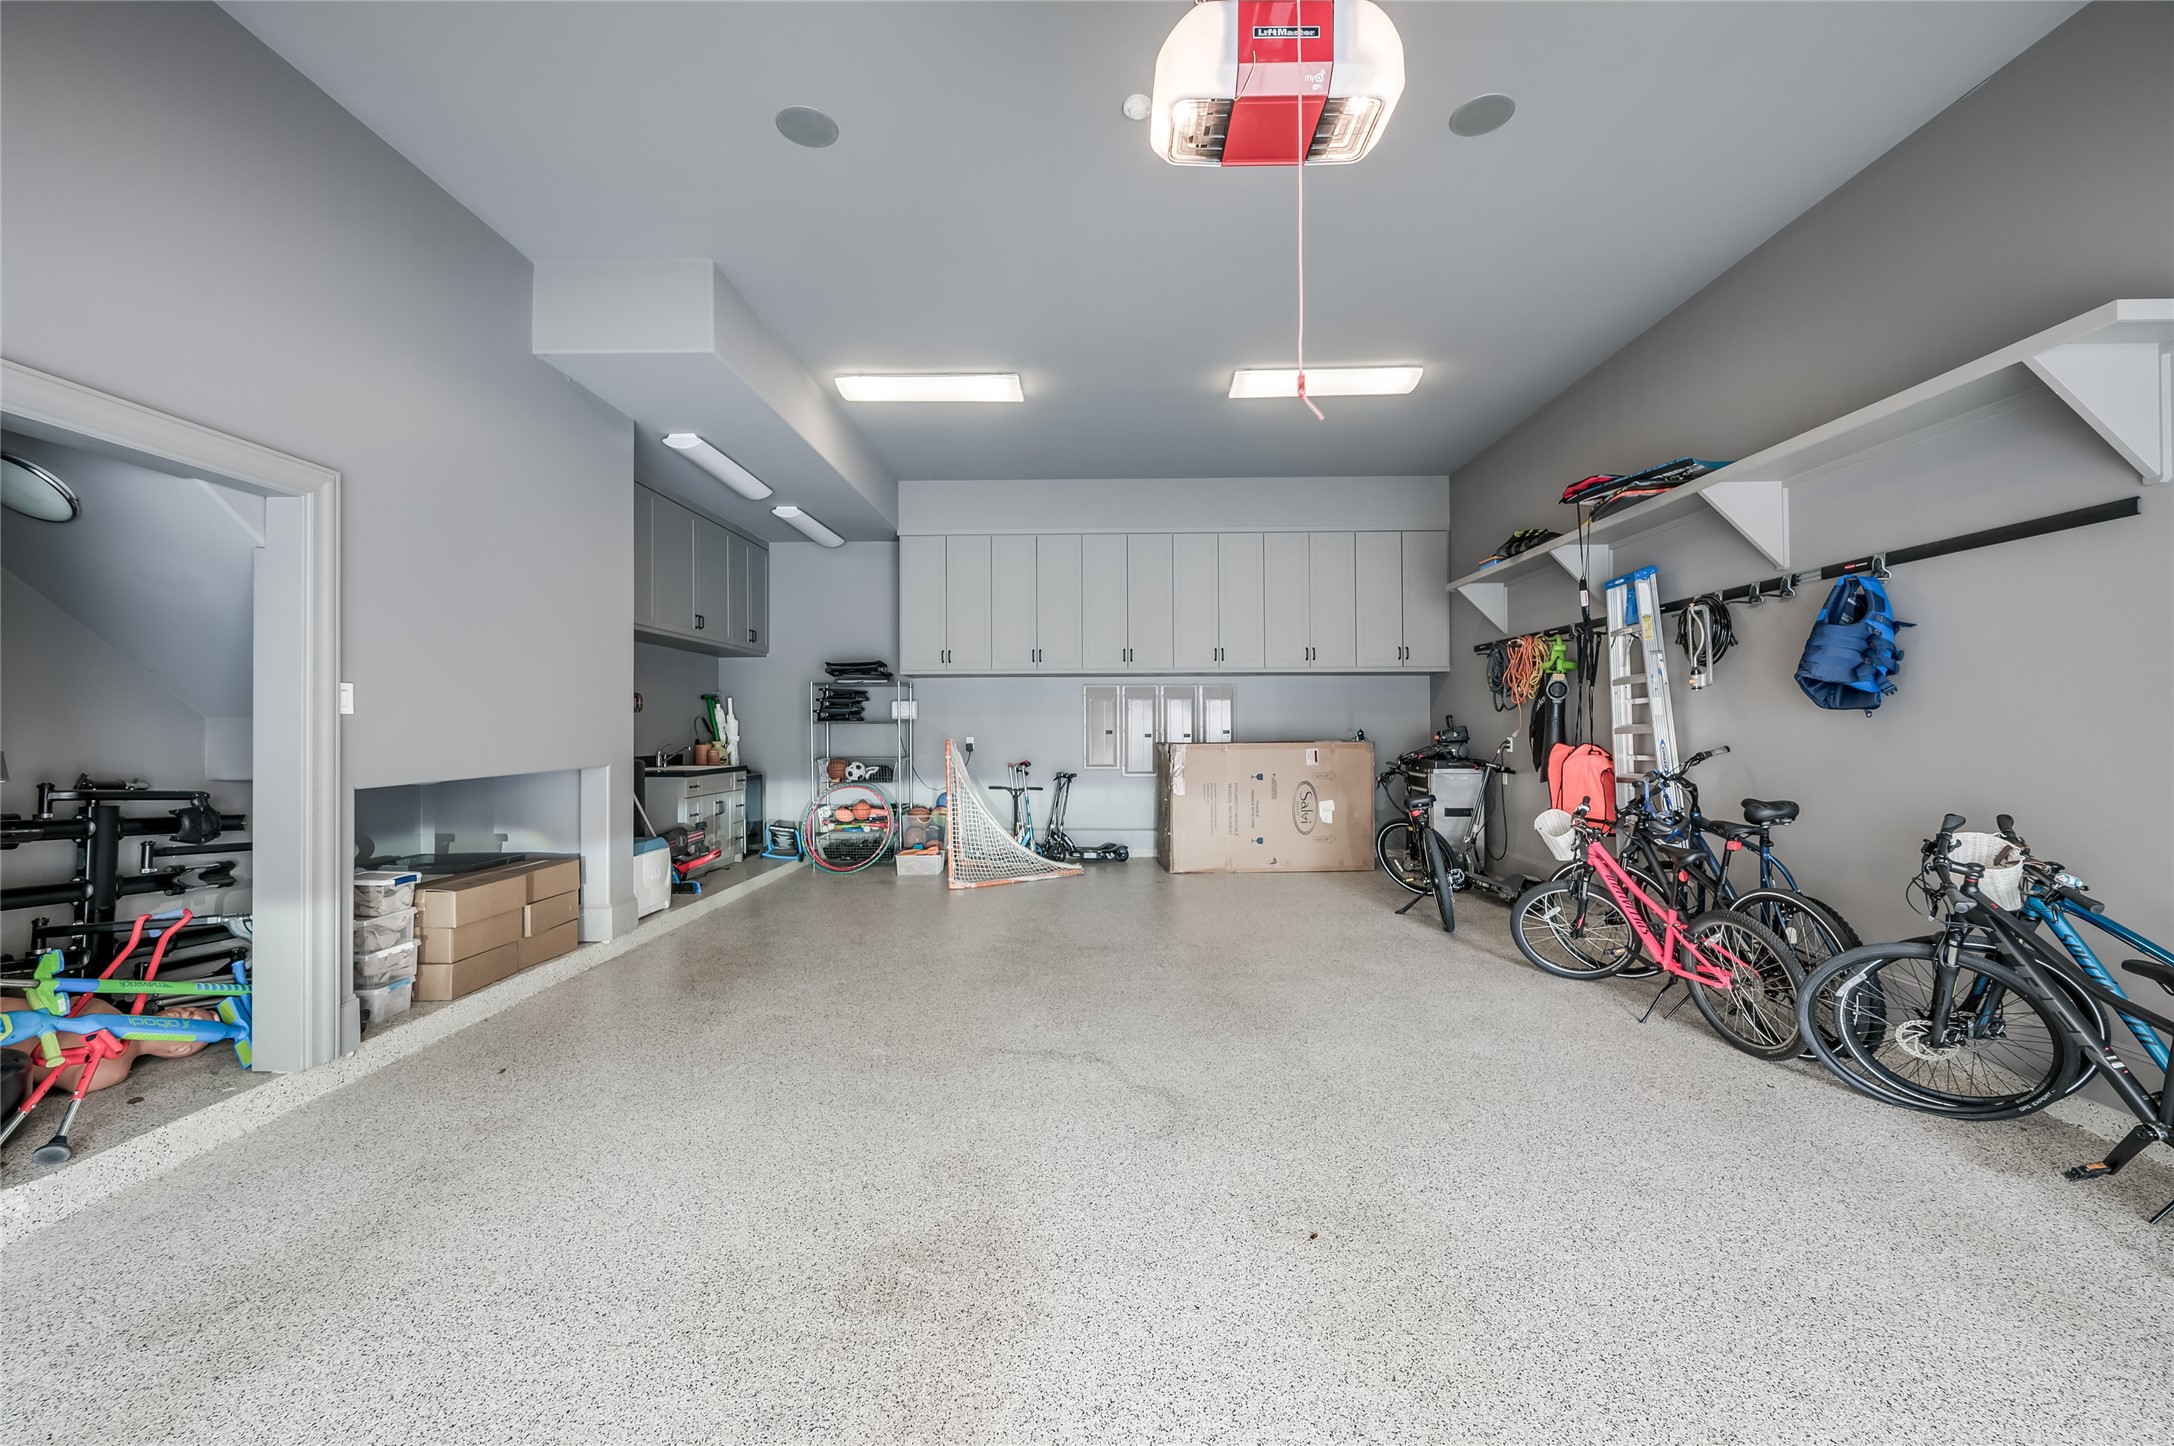 [Tandem Garage]
The garage provides tandem parking for up to four cars.